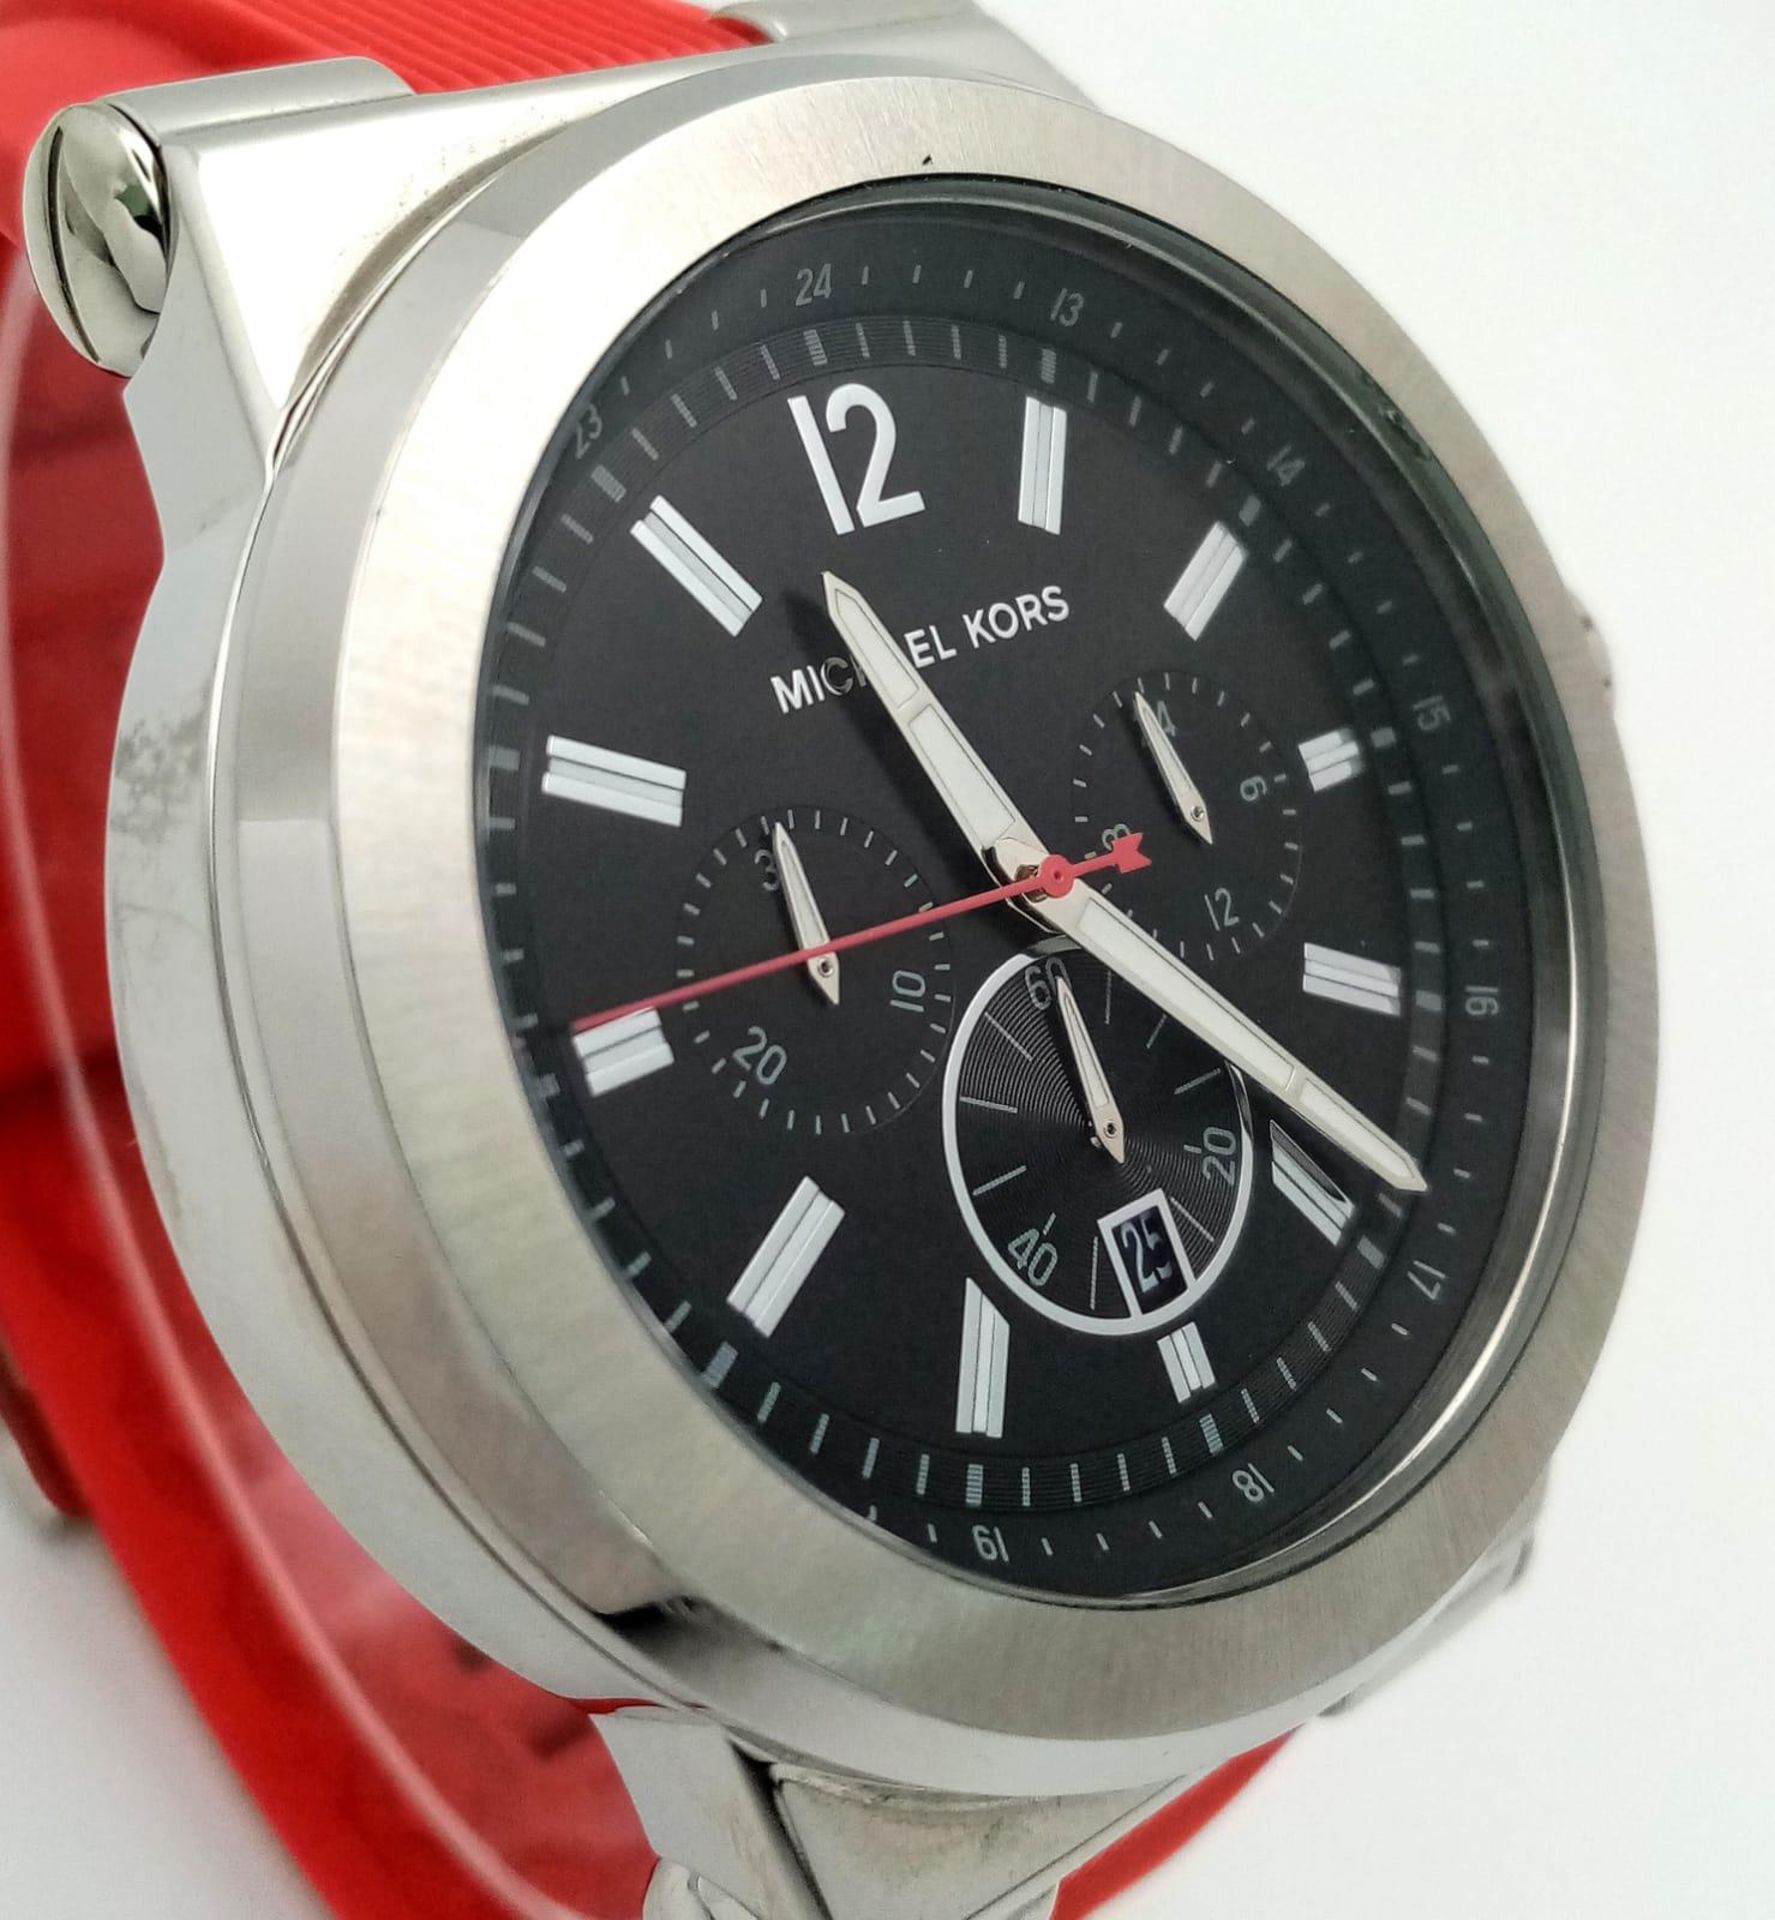 A Designer Michael Kors Chronograph Gents Watch. Red rubber strap. Stainless steel case - 49mm. - Bild 2 aus 5